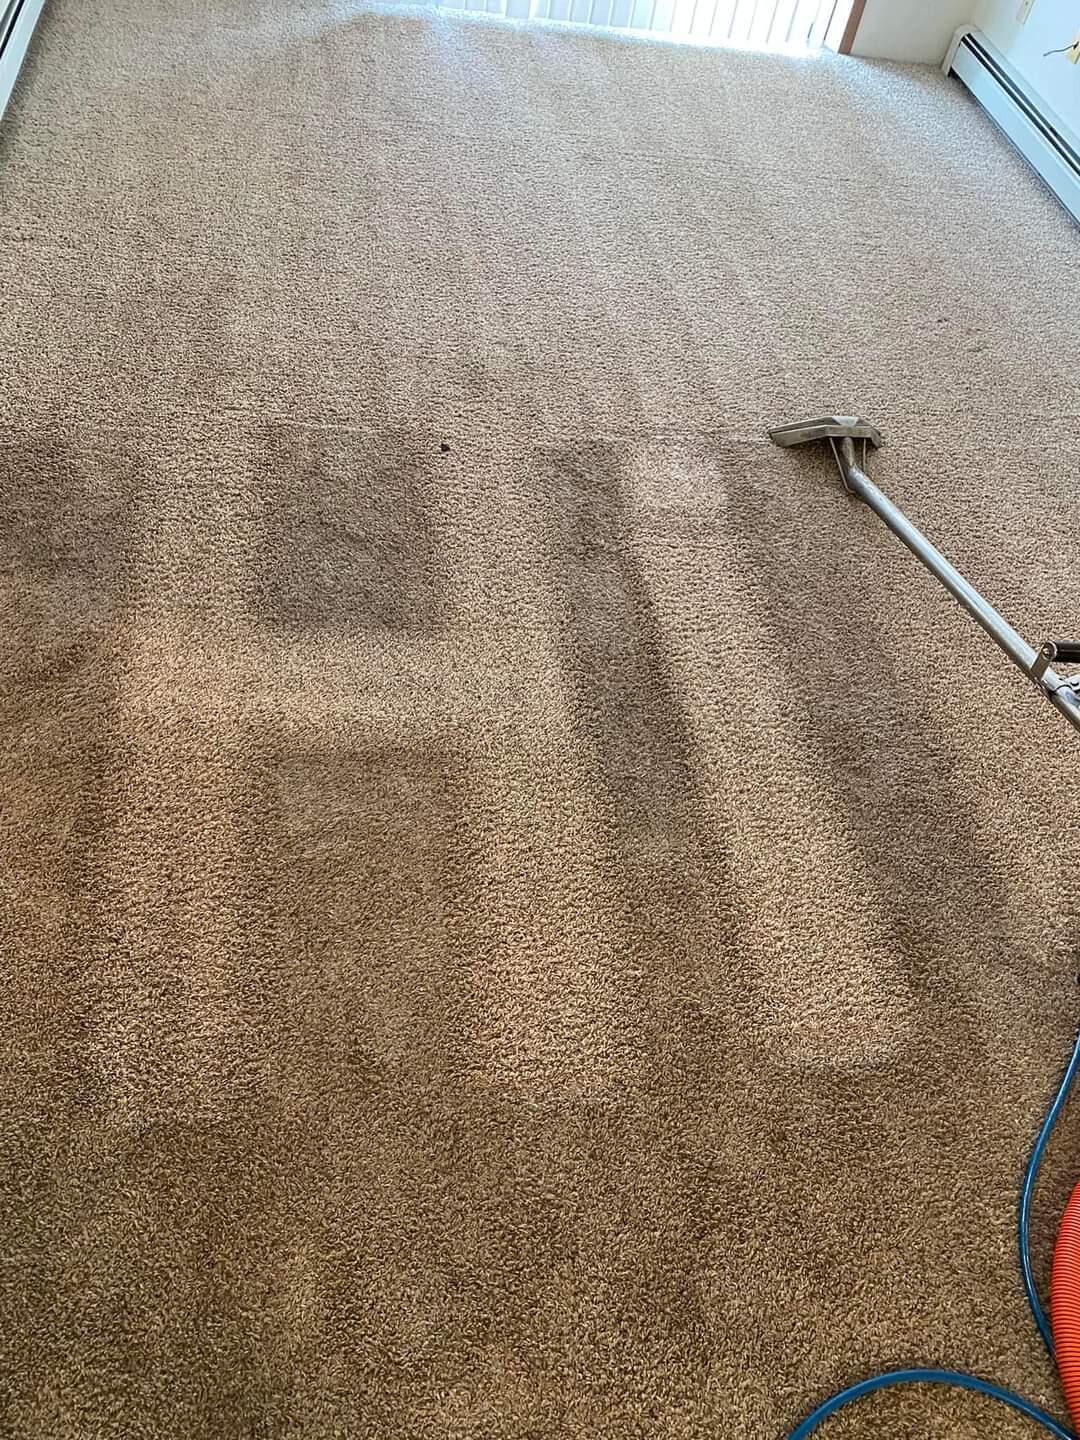 Fremont Carpet Cleaning Ne Nextdoor